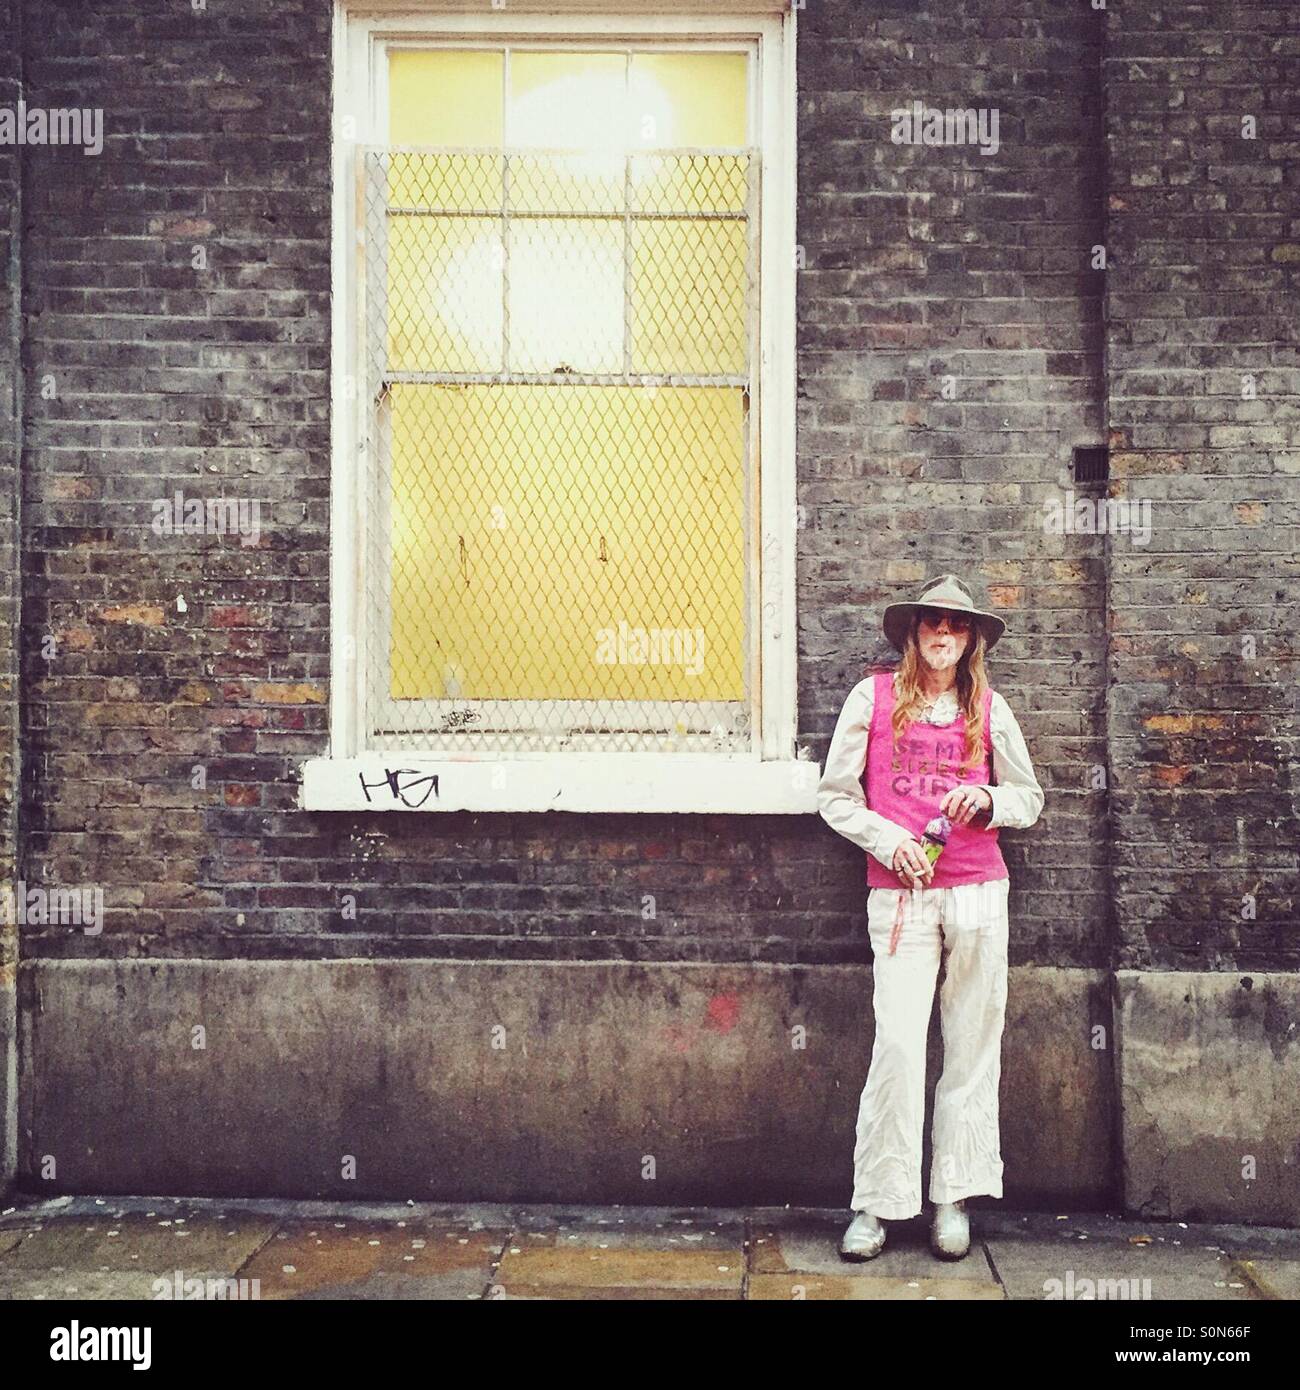 Hipster in Brick Lane, London, Uk Stock Photo